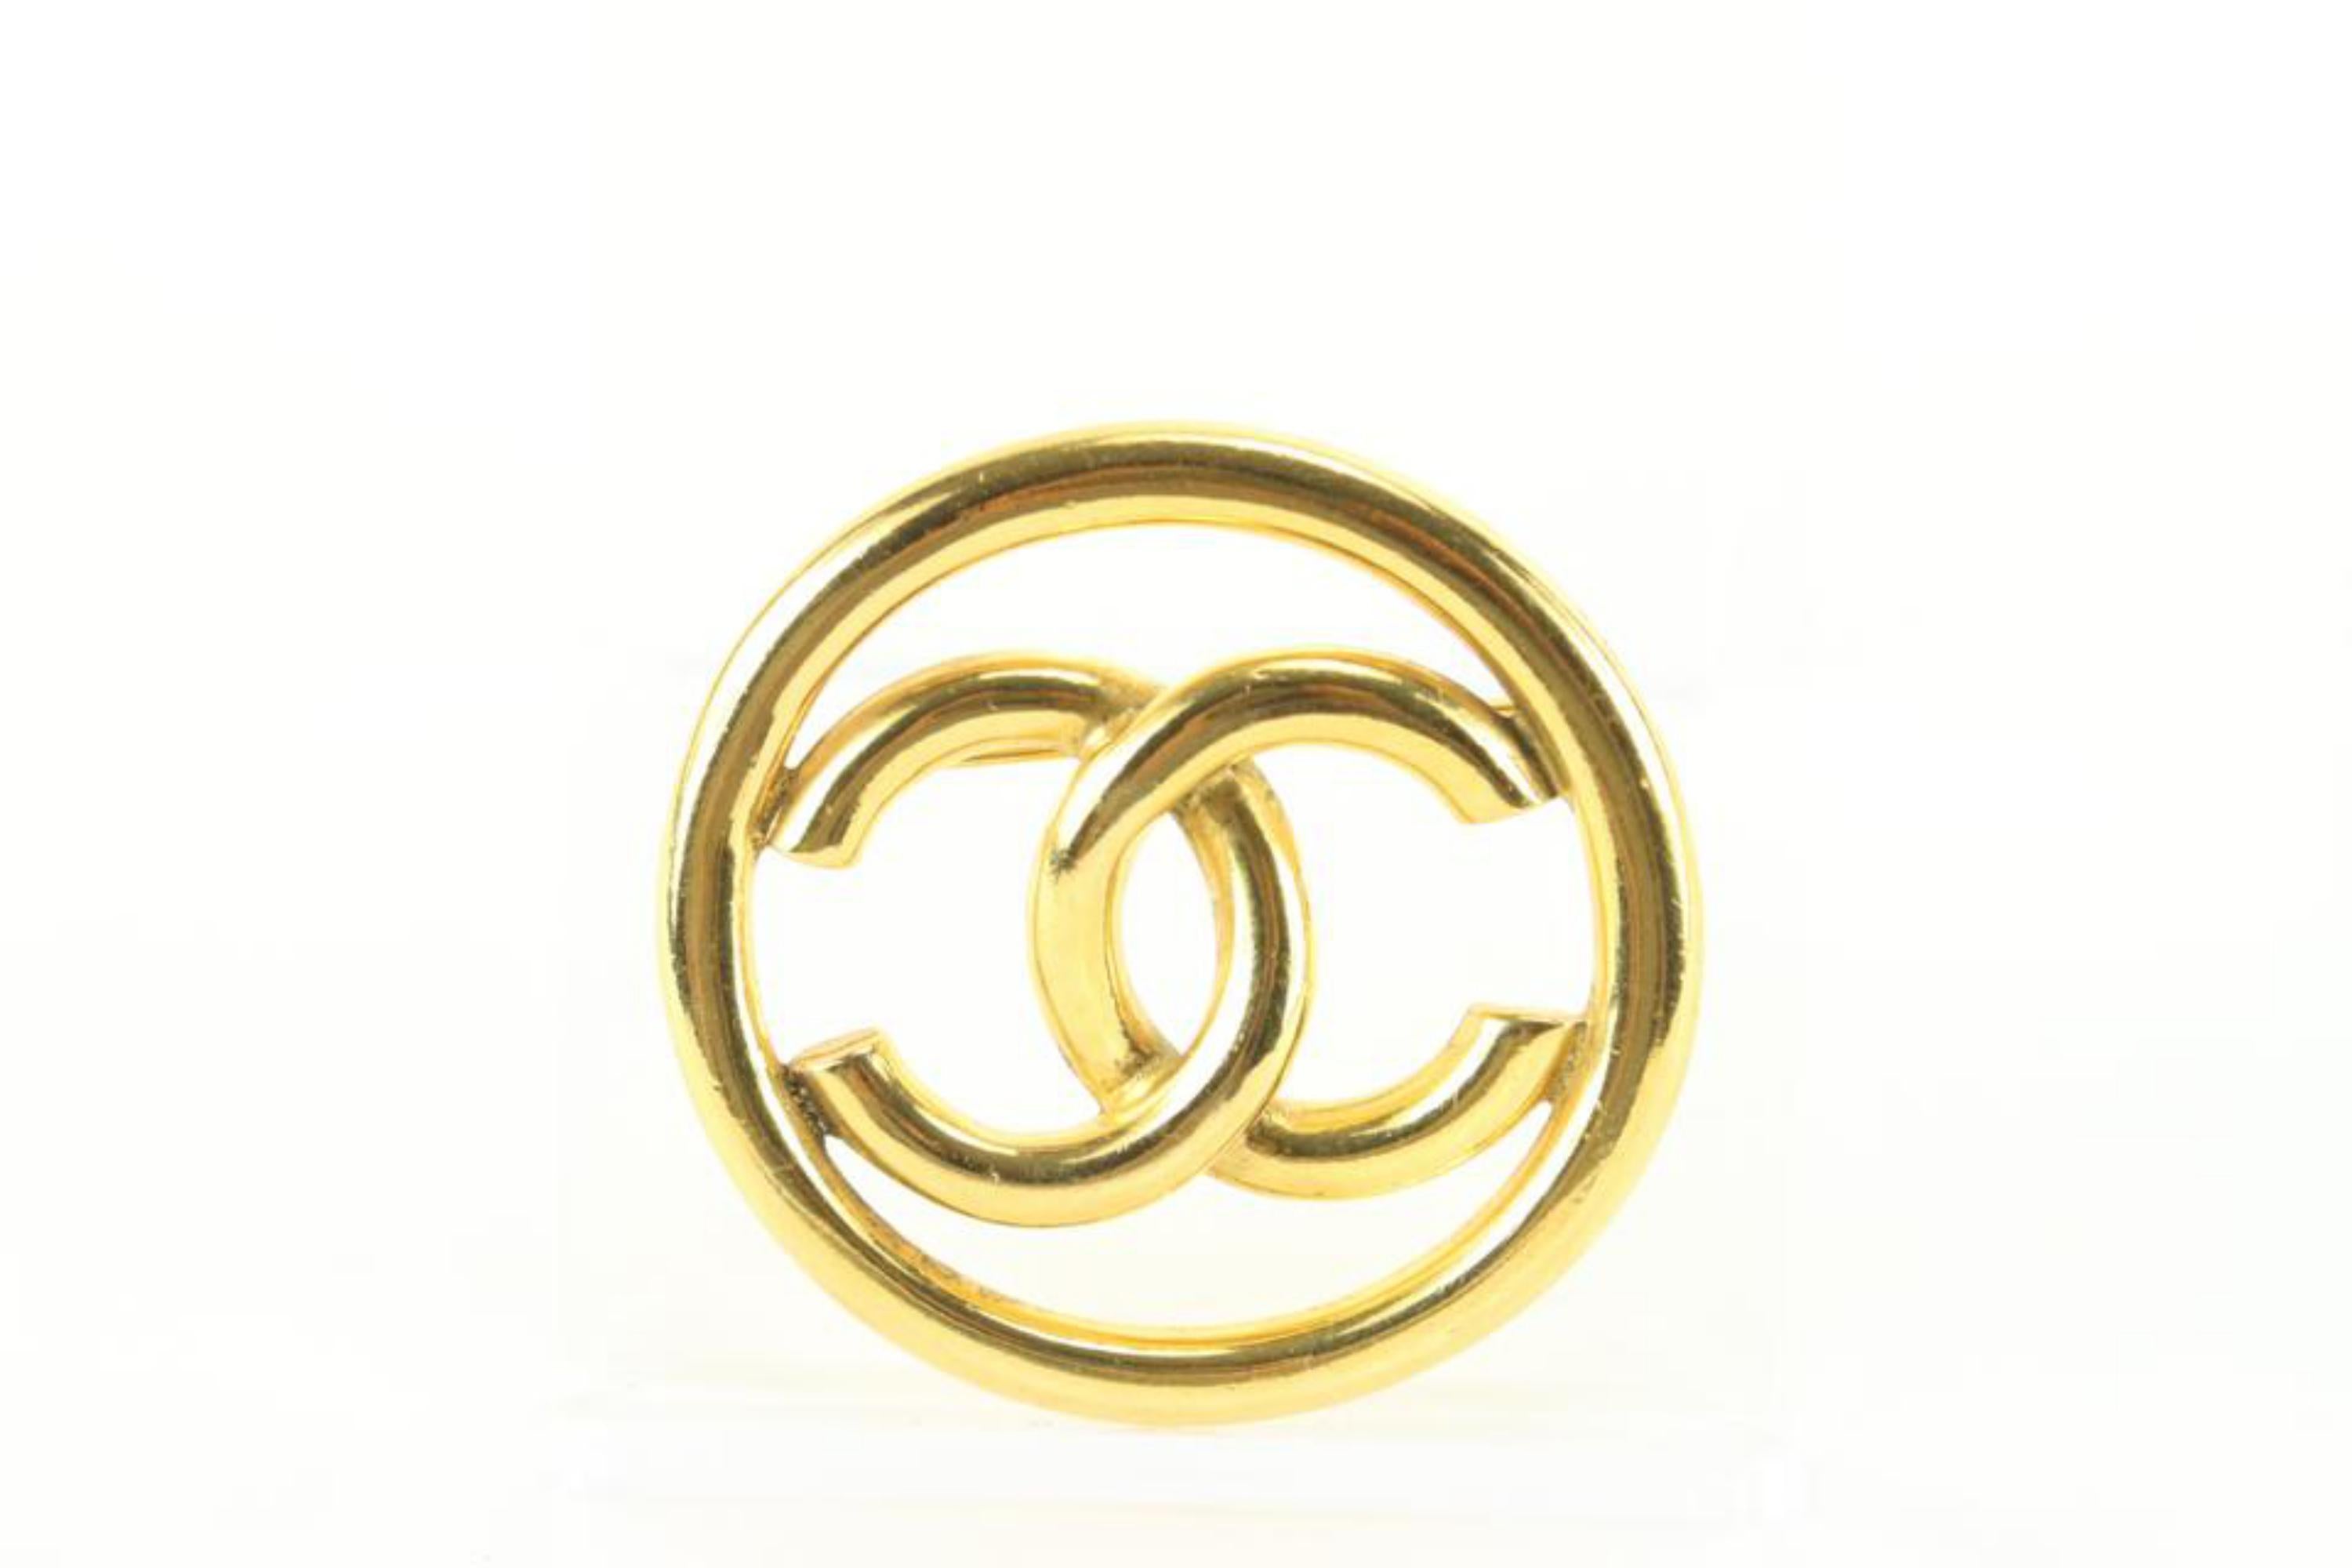 Chanel 93P 24K Gold Plate CC Logo Circle Brooch Pin 31ck824s